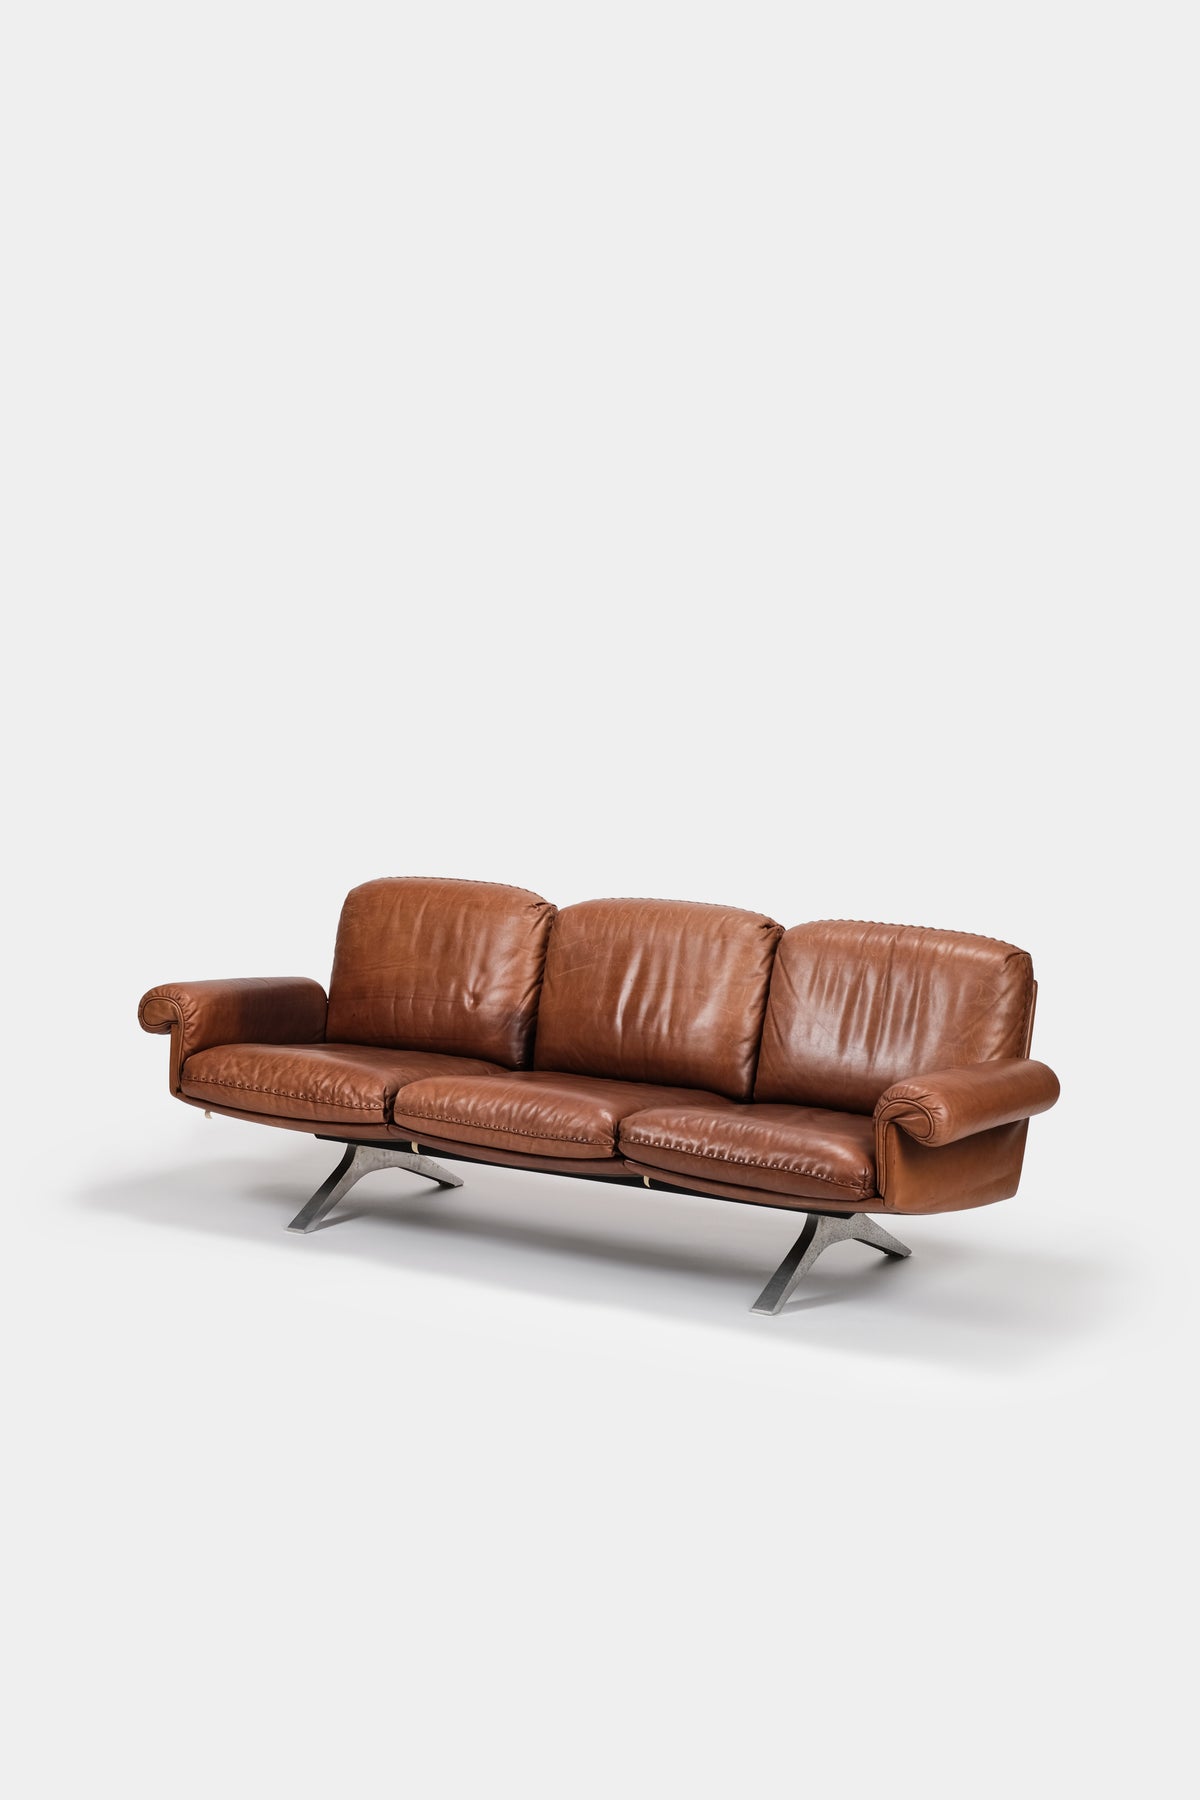 Sofa Modell SD-31, De Sede, 60er